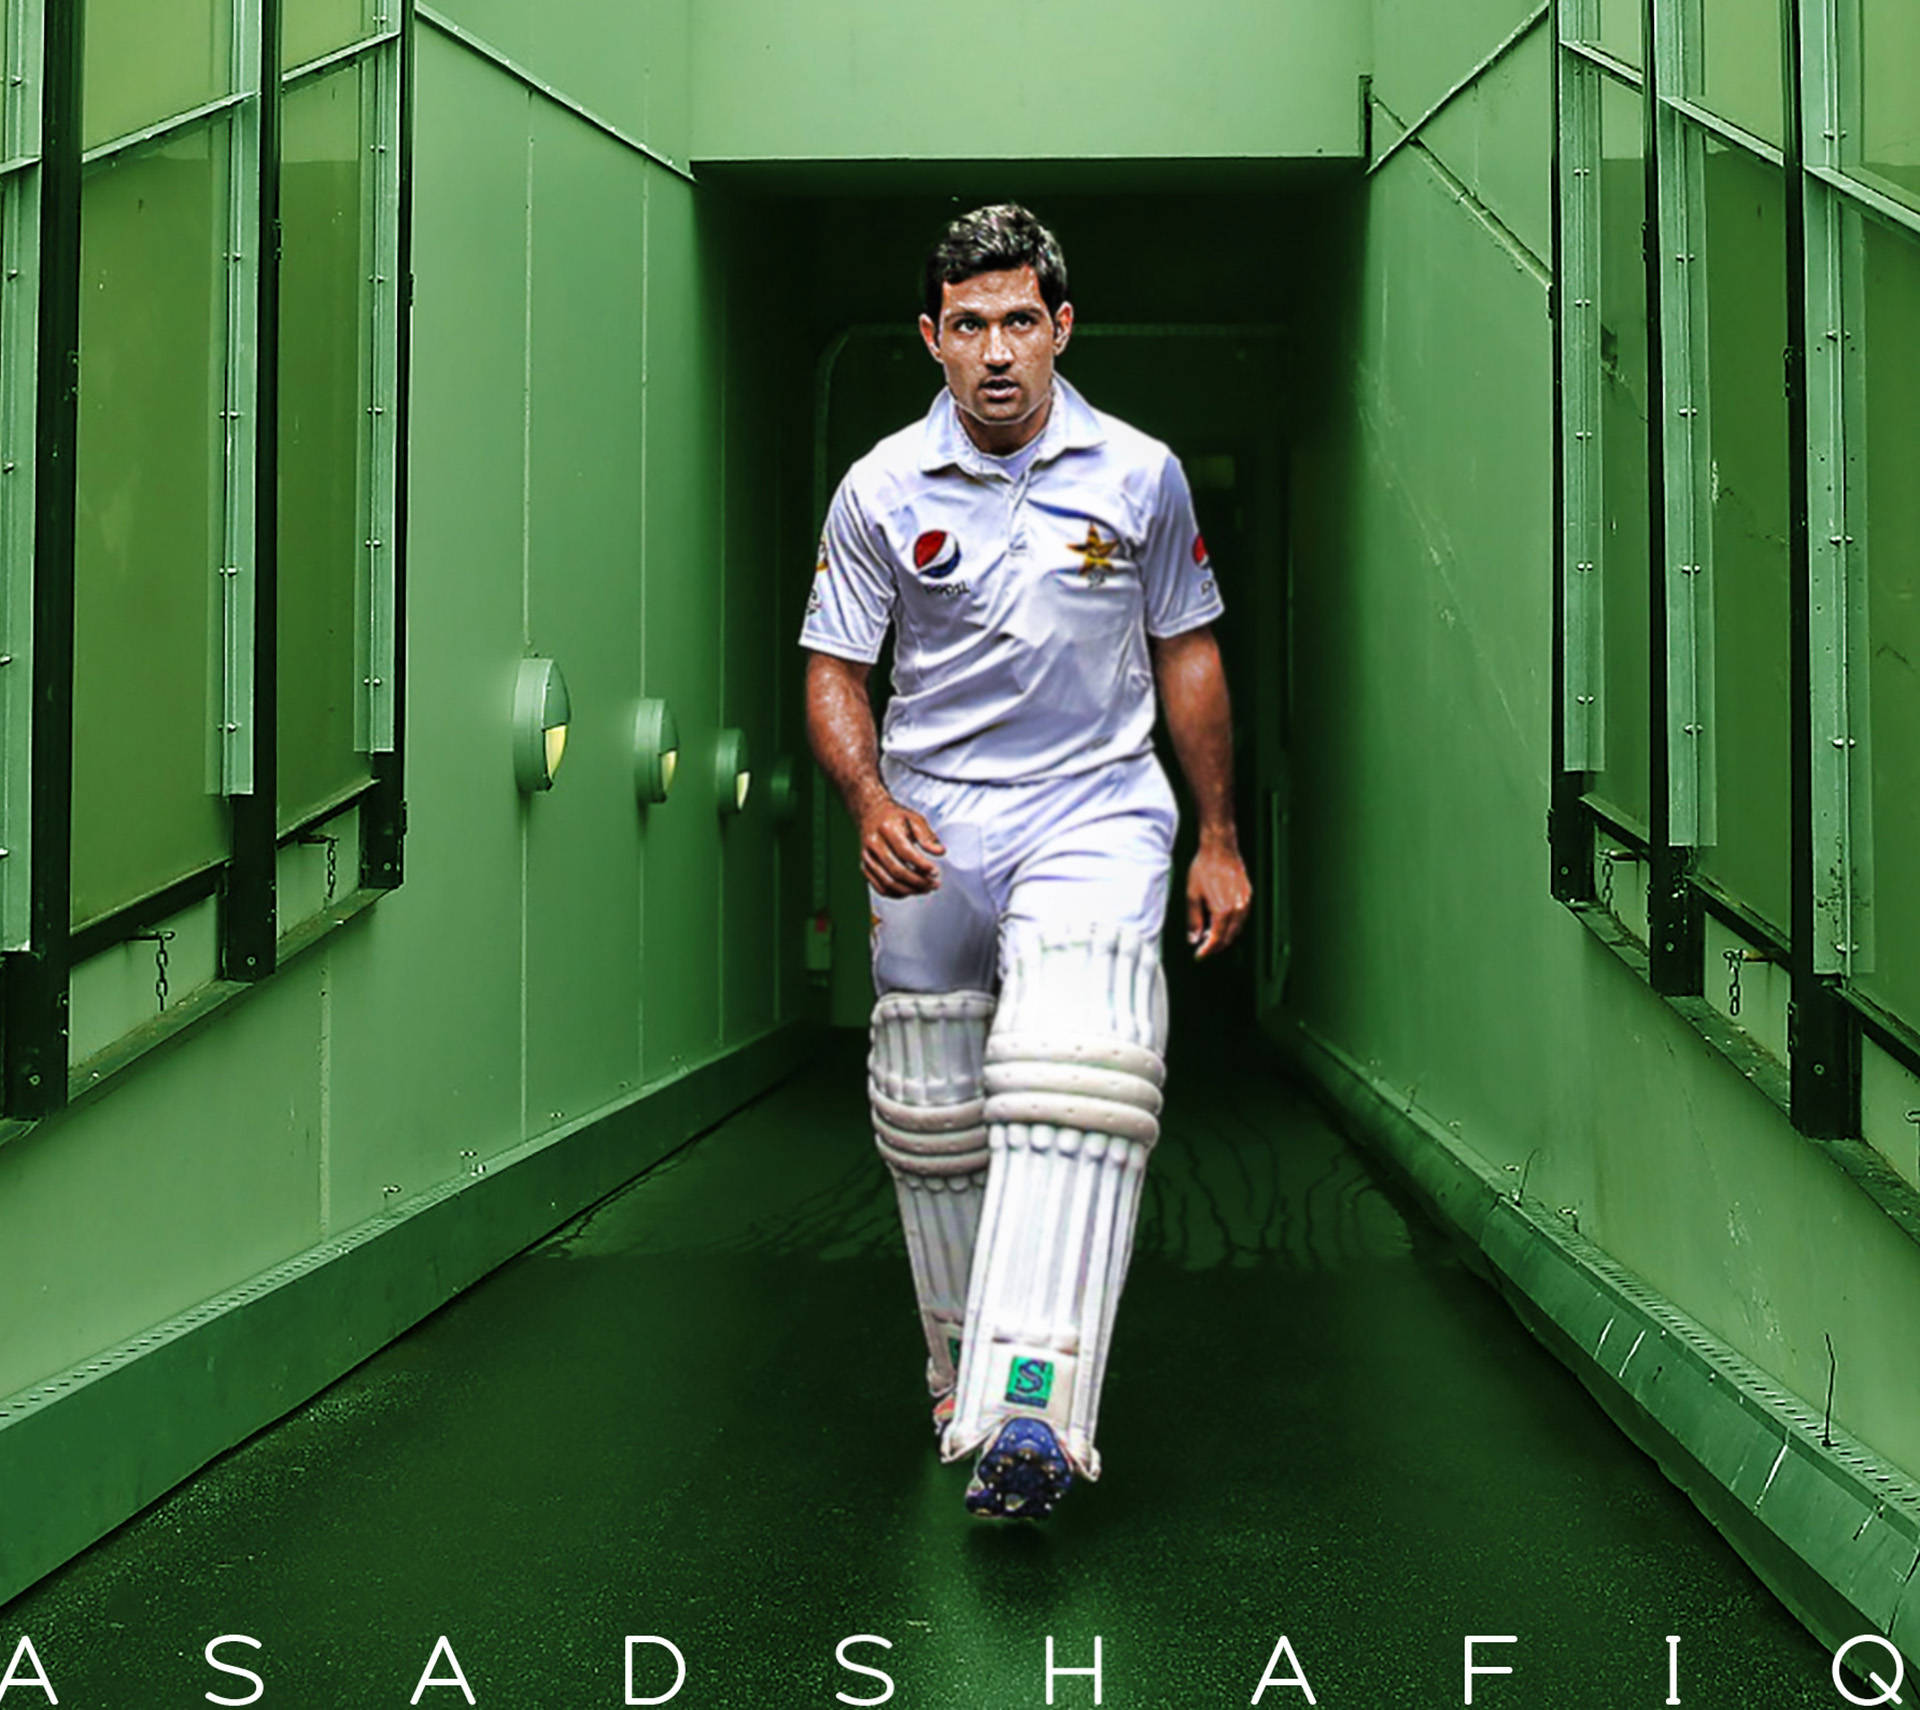 Spirited Cricketer in Action - Pakistan Cricket Team Wallpaper